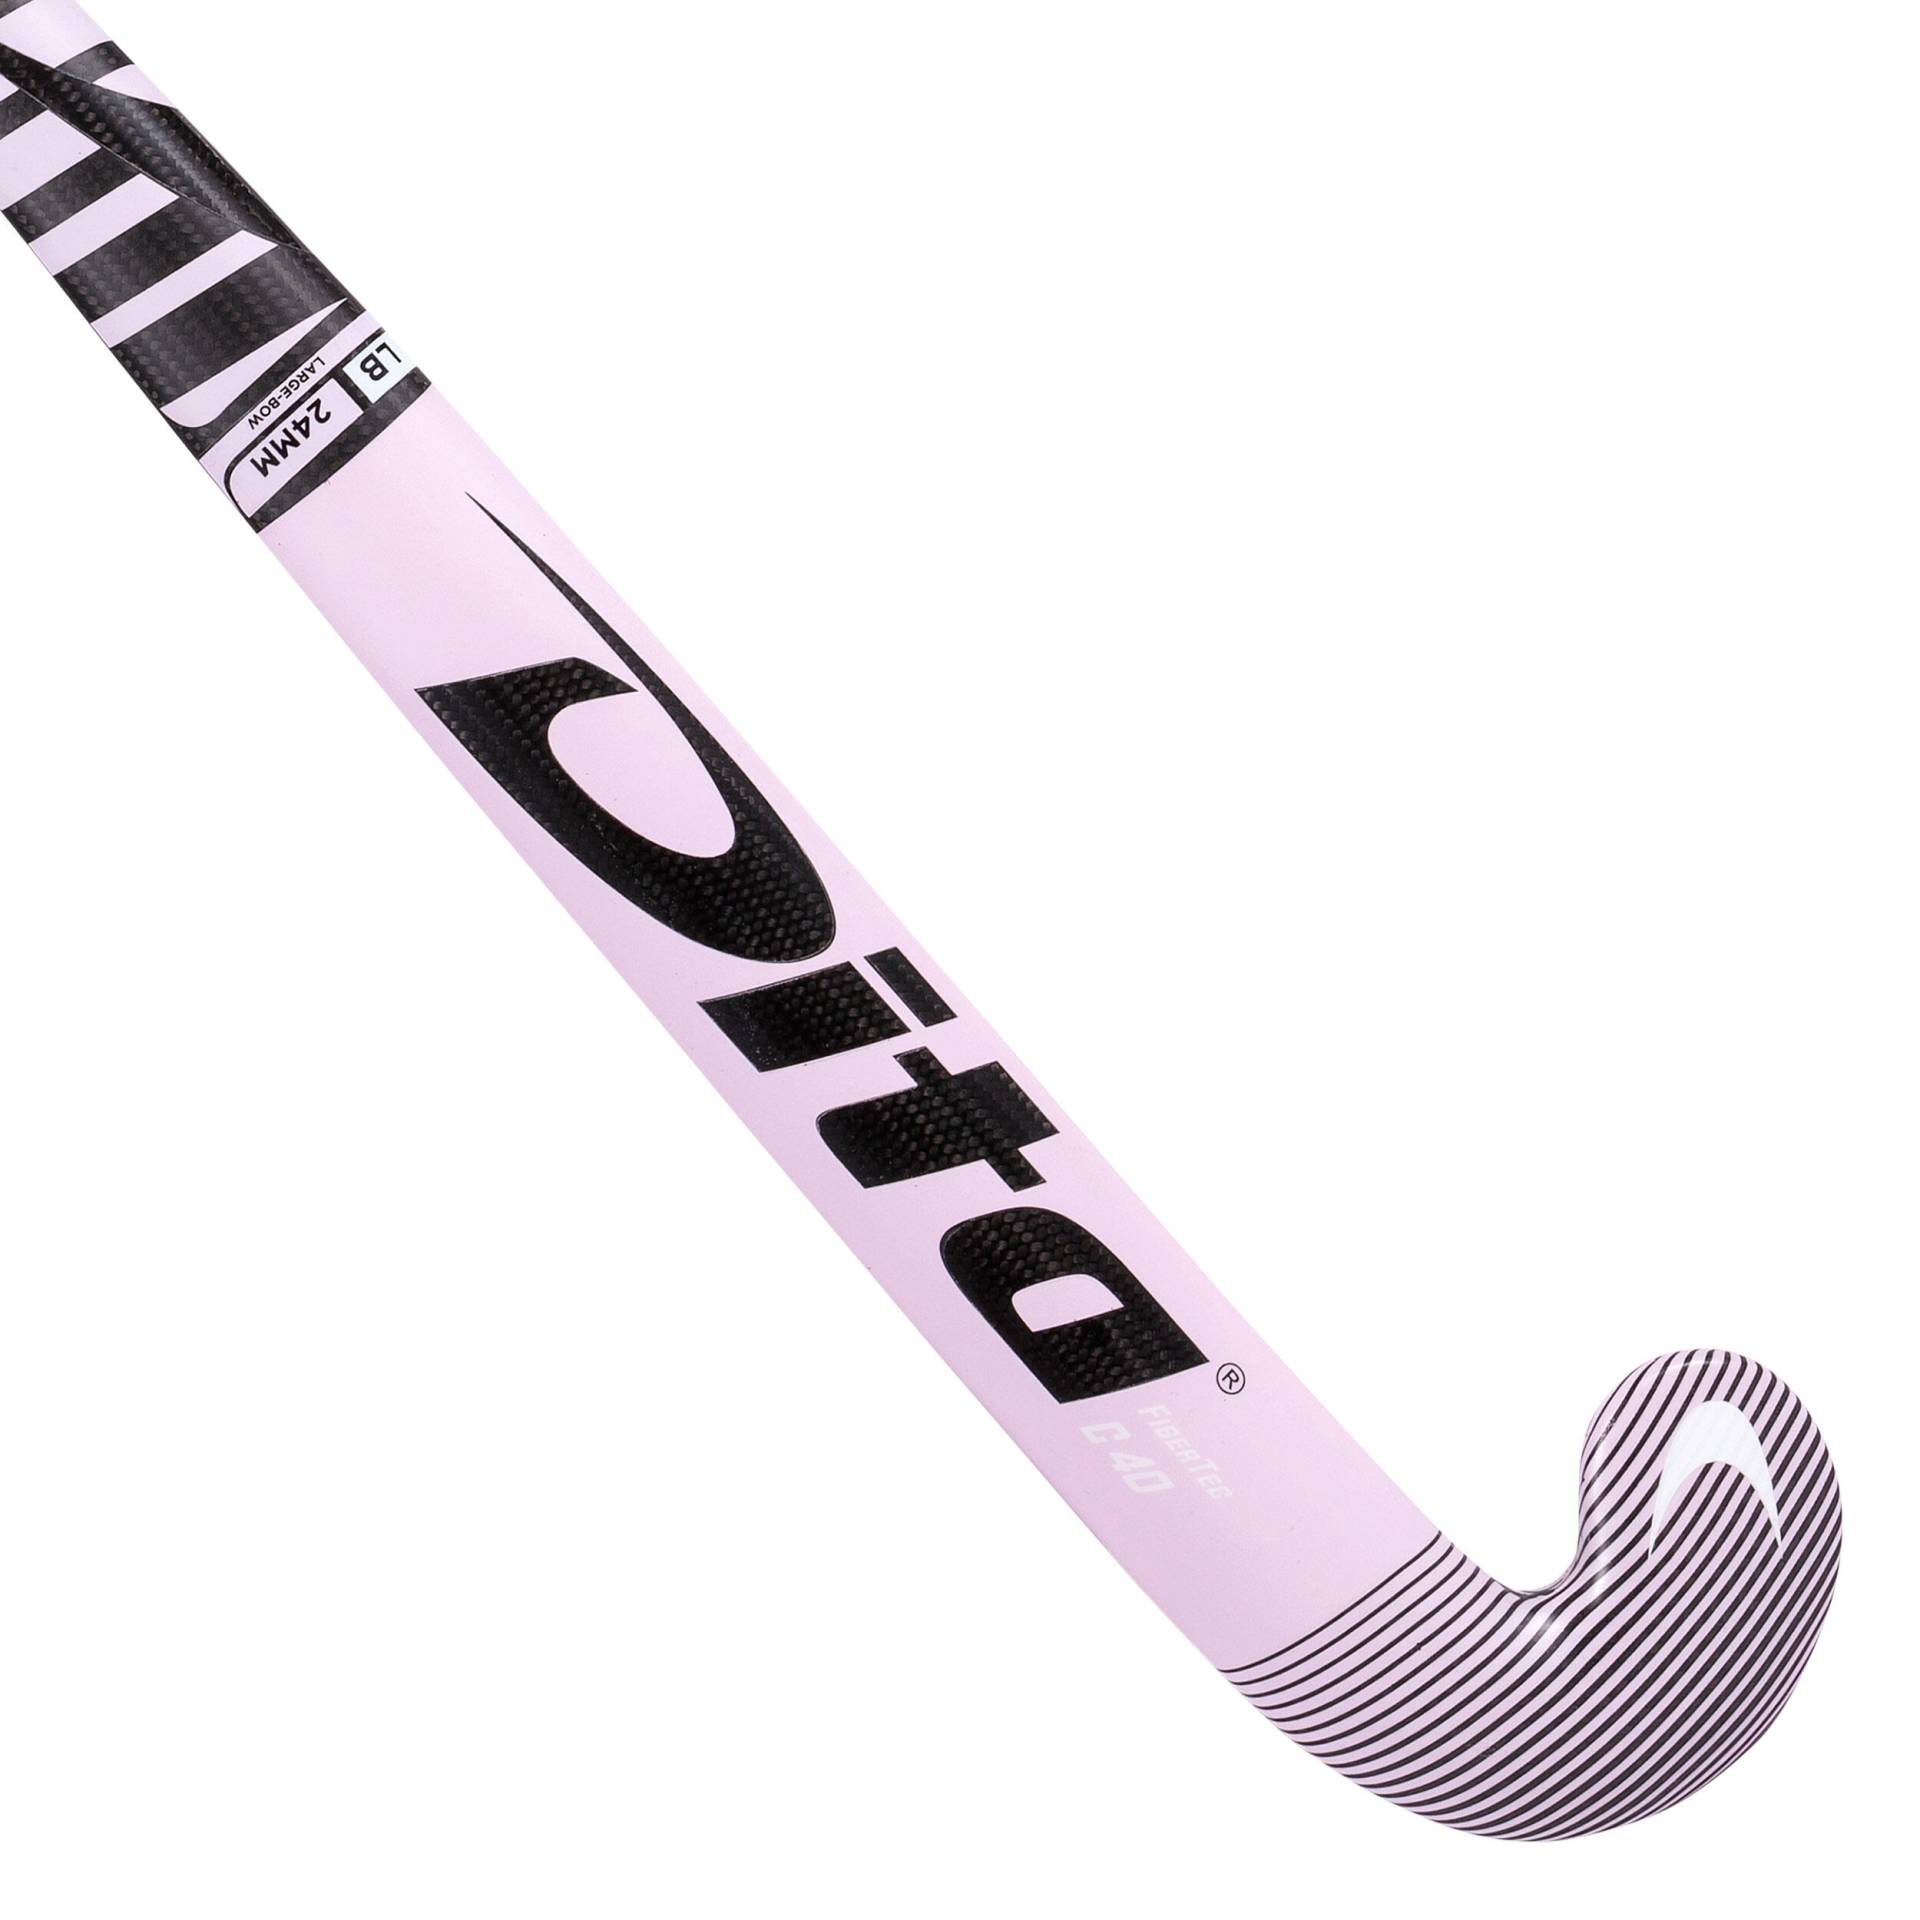 Damen/Herren Feldhockeyschläger Fortgeschrittene Low Bow 40 % Carbon - FiberTecC40 hellrosa von Dita